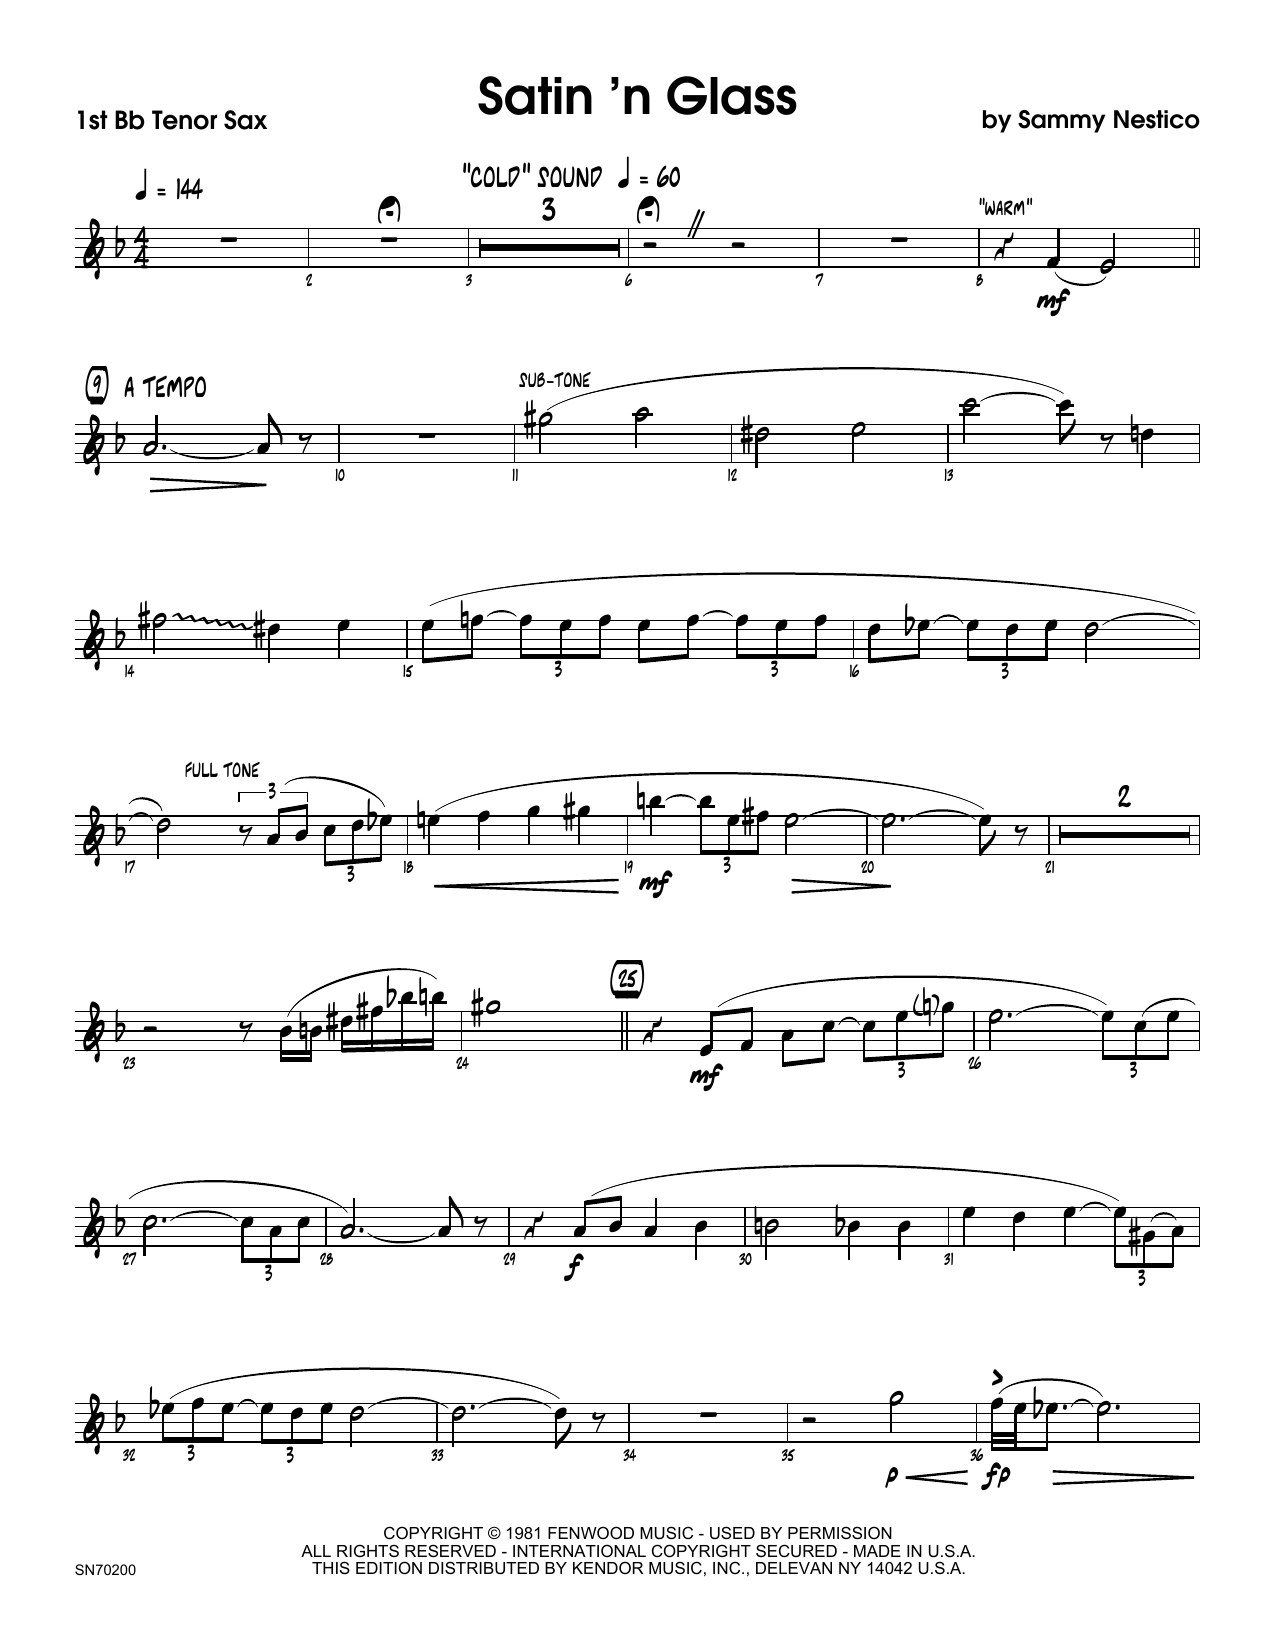 Download Sammy Nestico Satin 'n Glass - 1st Tenor Saxophone Sheet Music